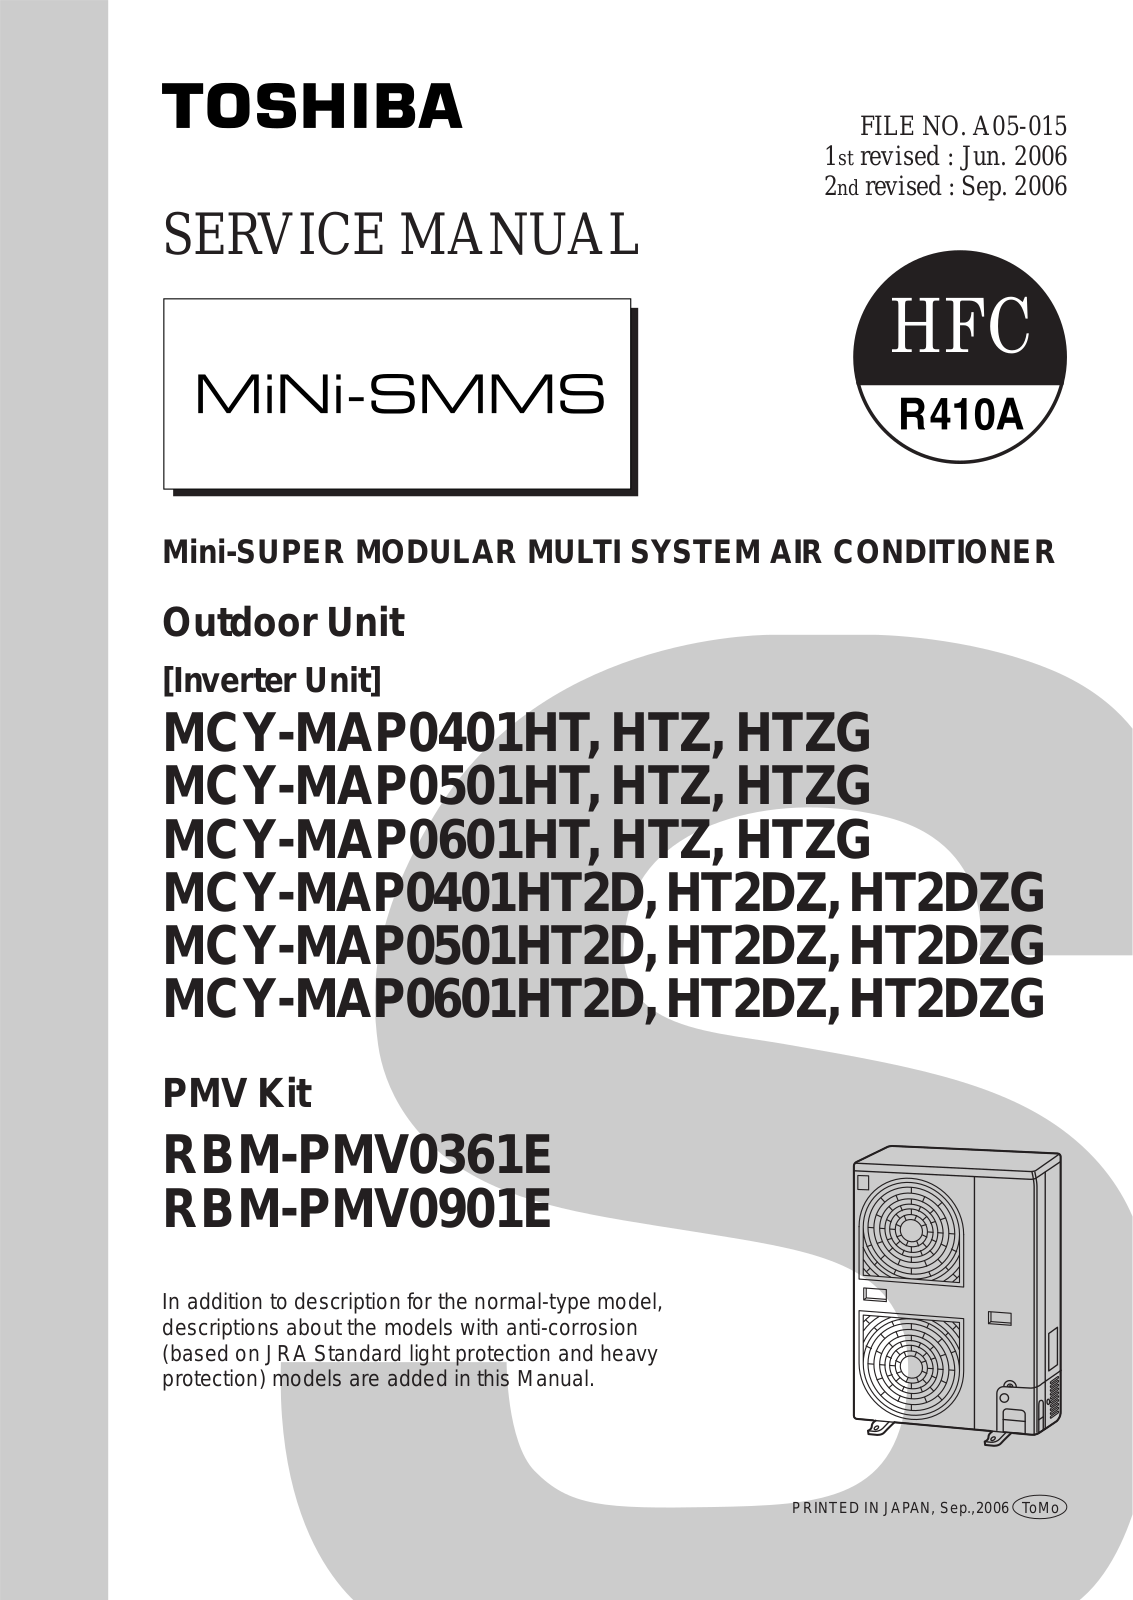 Toshiba RBM-PMV0361E, MCY-MAP0401HT2D, RBM-PMV0901E, MCY-MAP0601HT, MCY-MAP0501HT2D SERVICE MANUAL